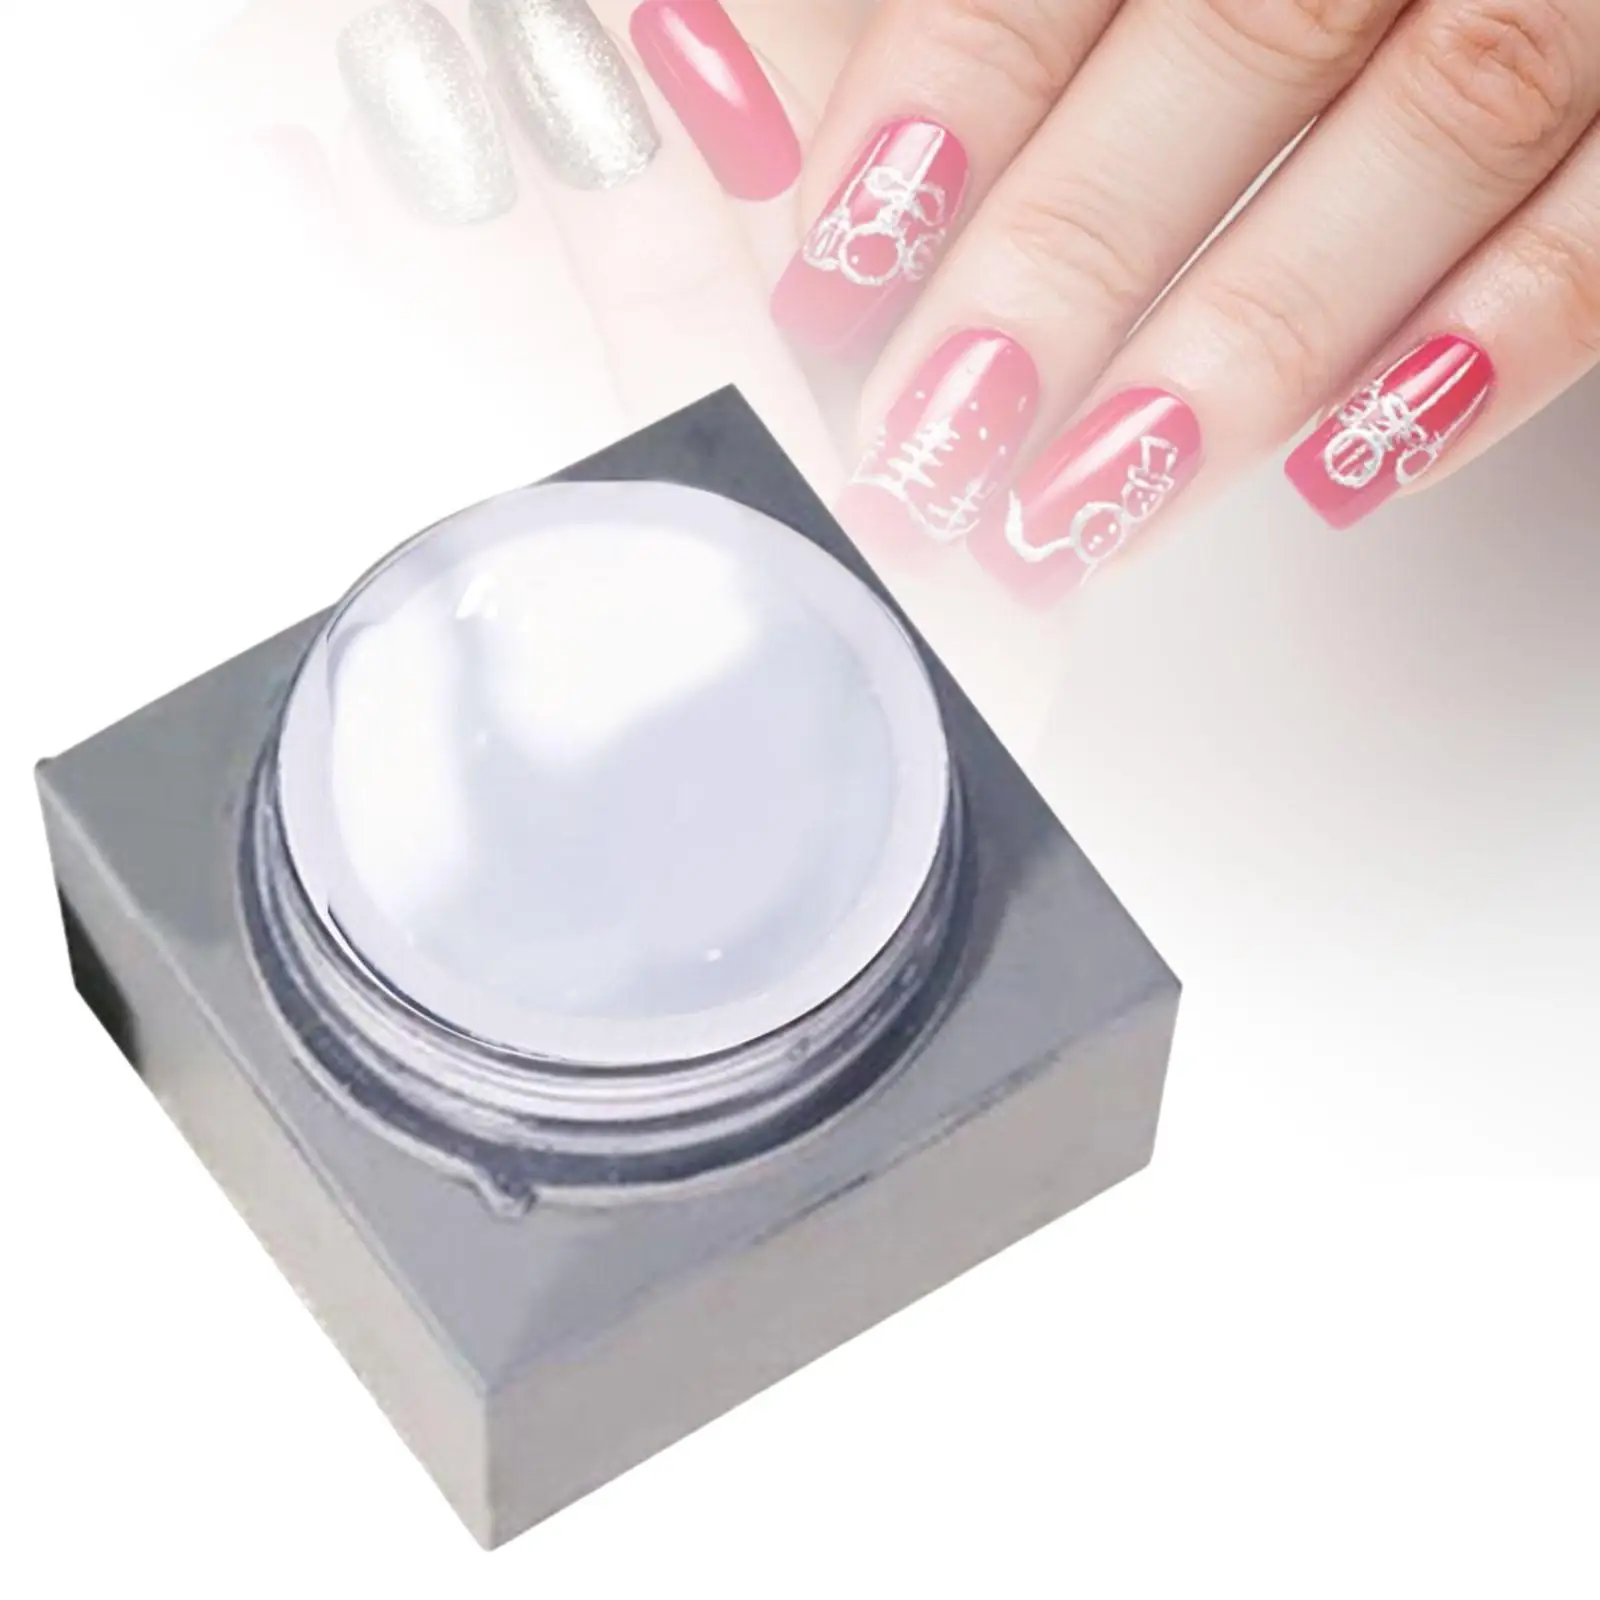   5G  ,High Adhesion Soak Off  Light,  Design Manicure Starter Gel Nail Polish, for Salons Home DIY